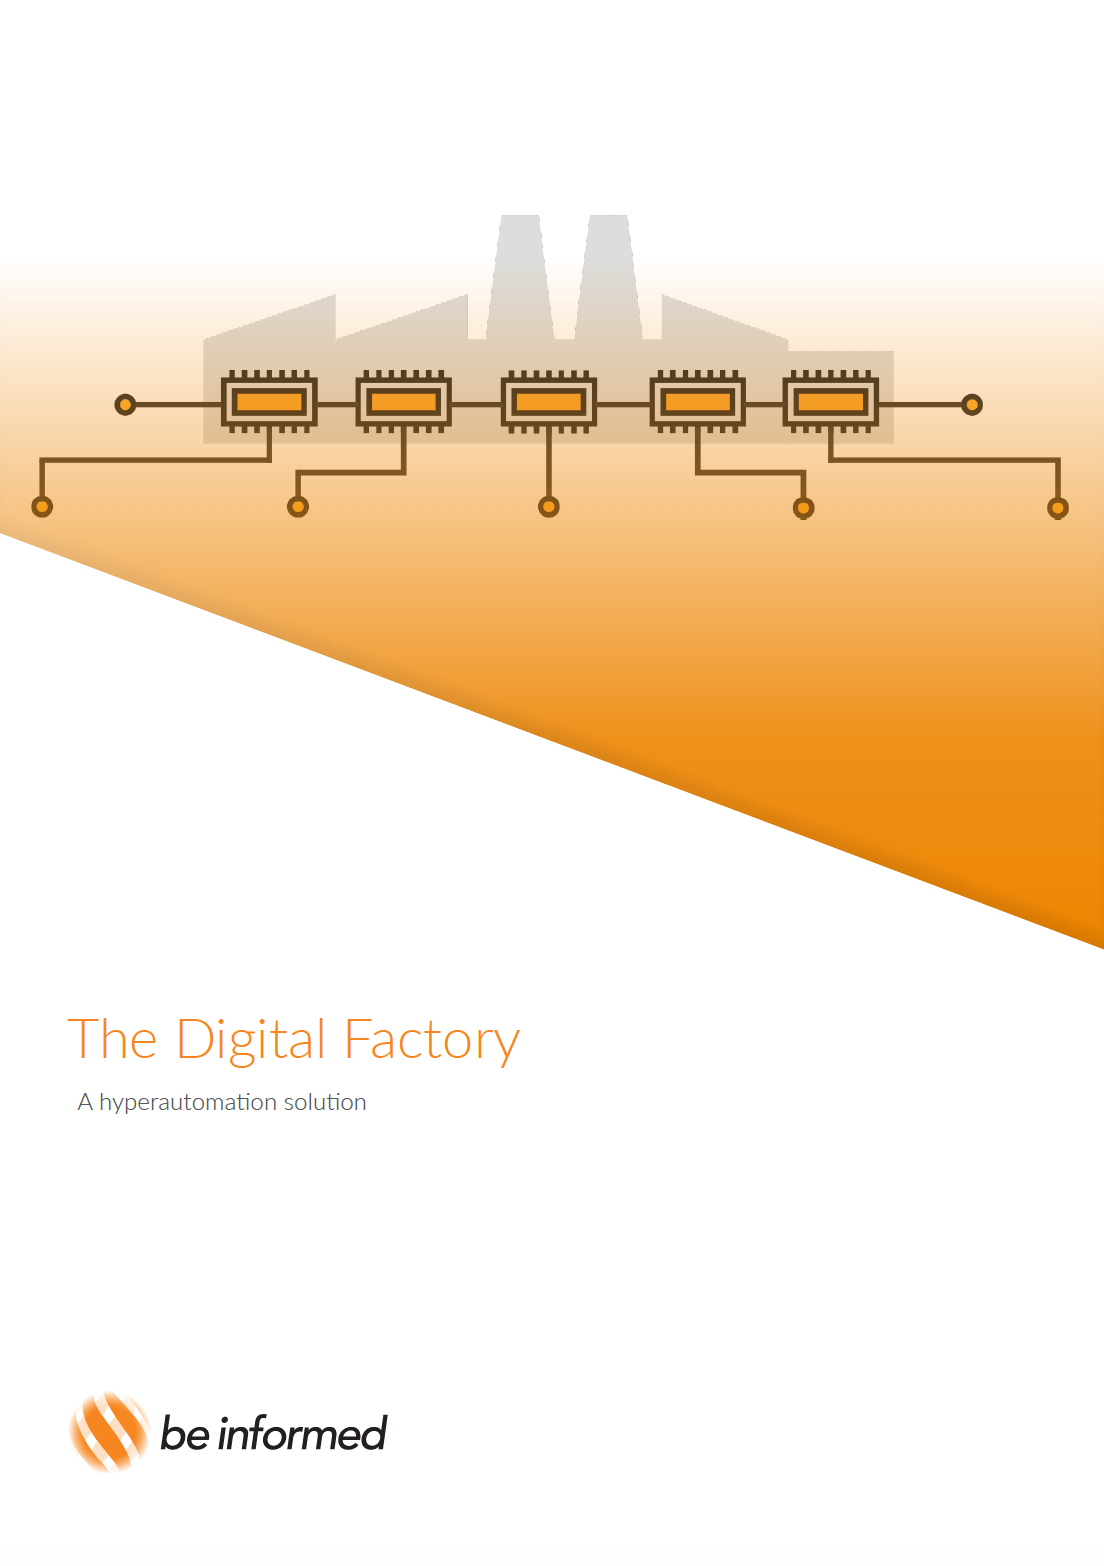 The Digital Factory brochure